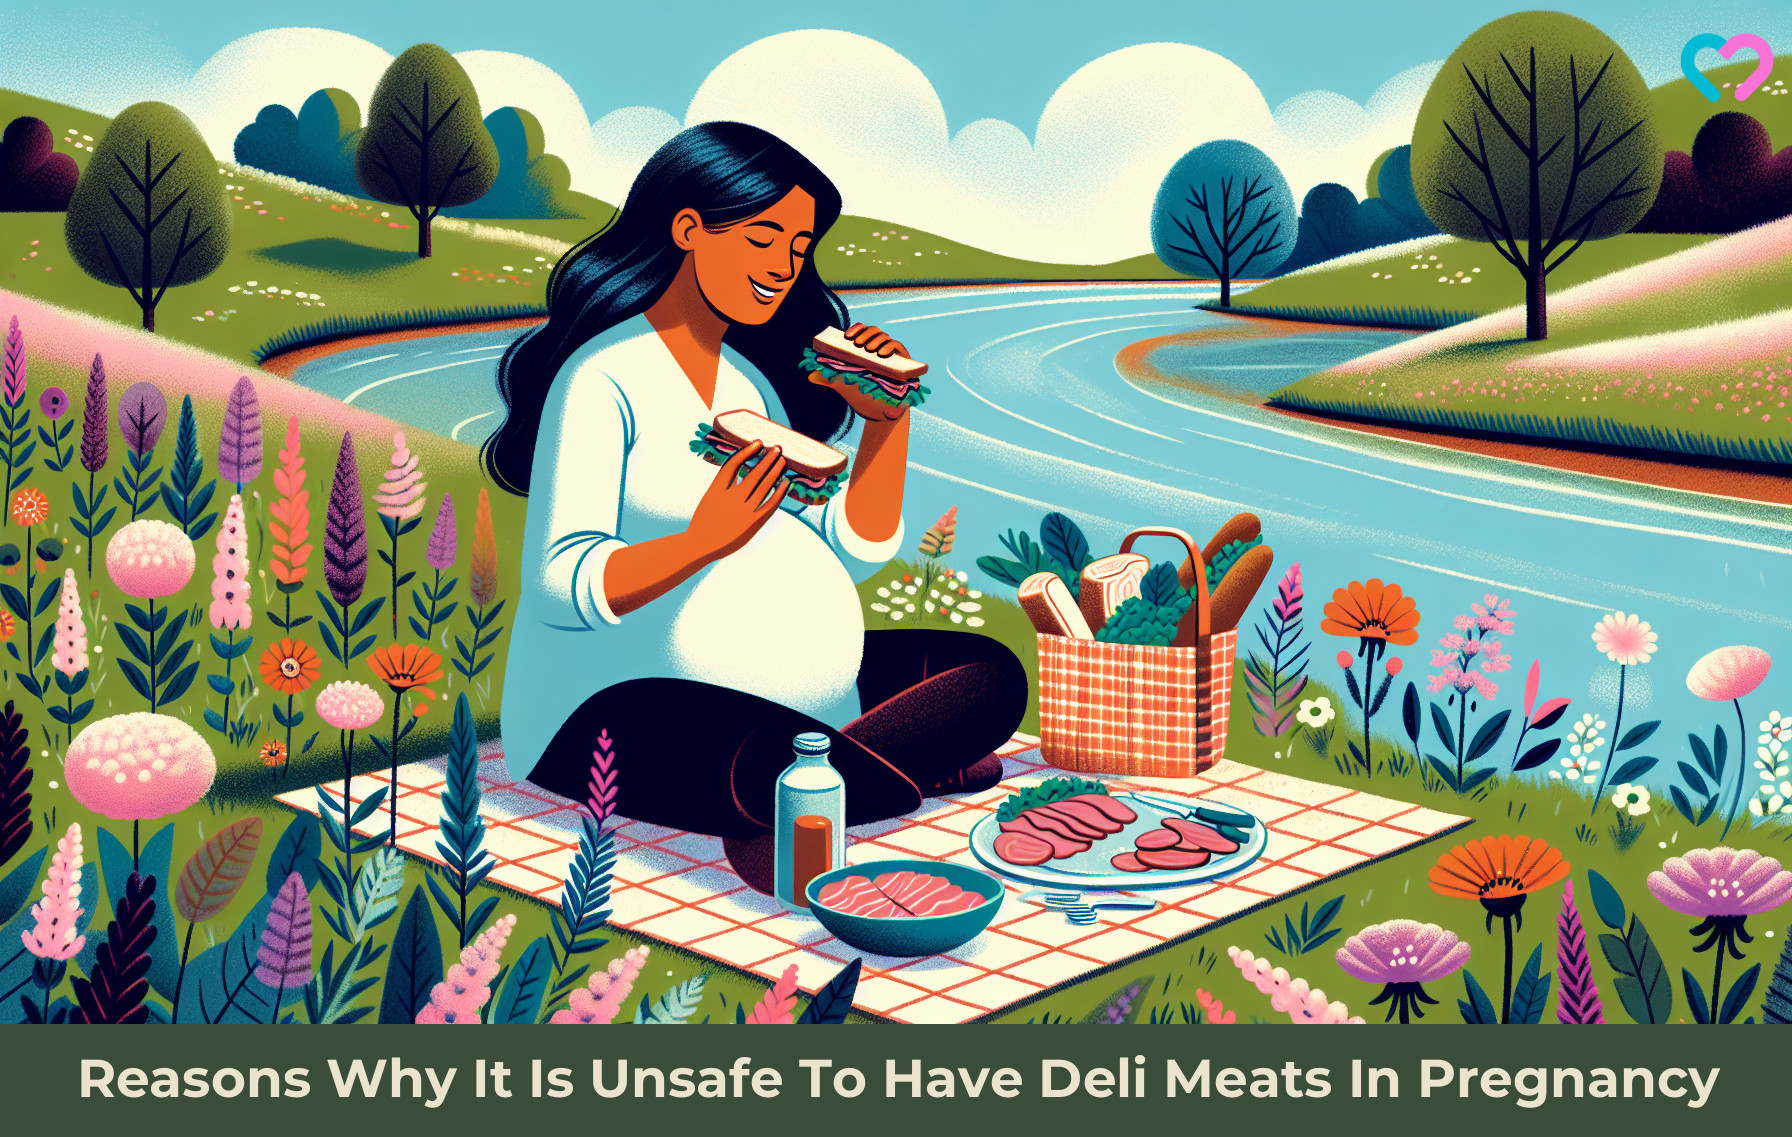 deli meats during pregnancy_illustration